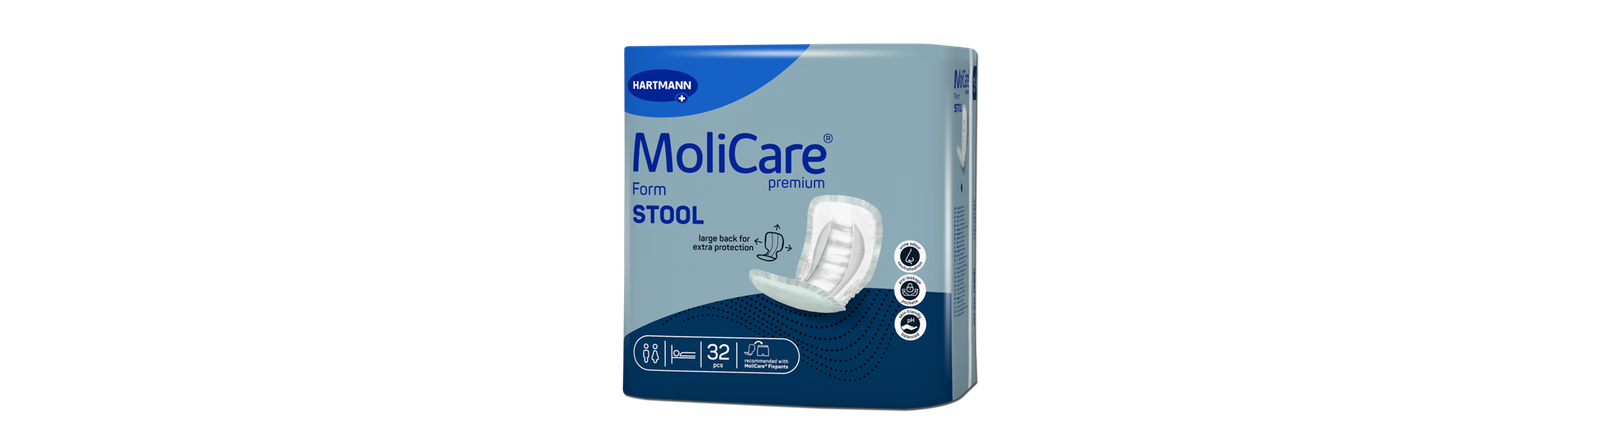 MoliCare® Form STOOL – die Lösung bei Stuhlinkontinenz